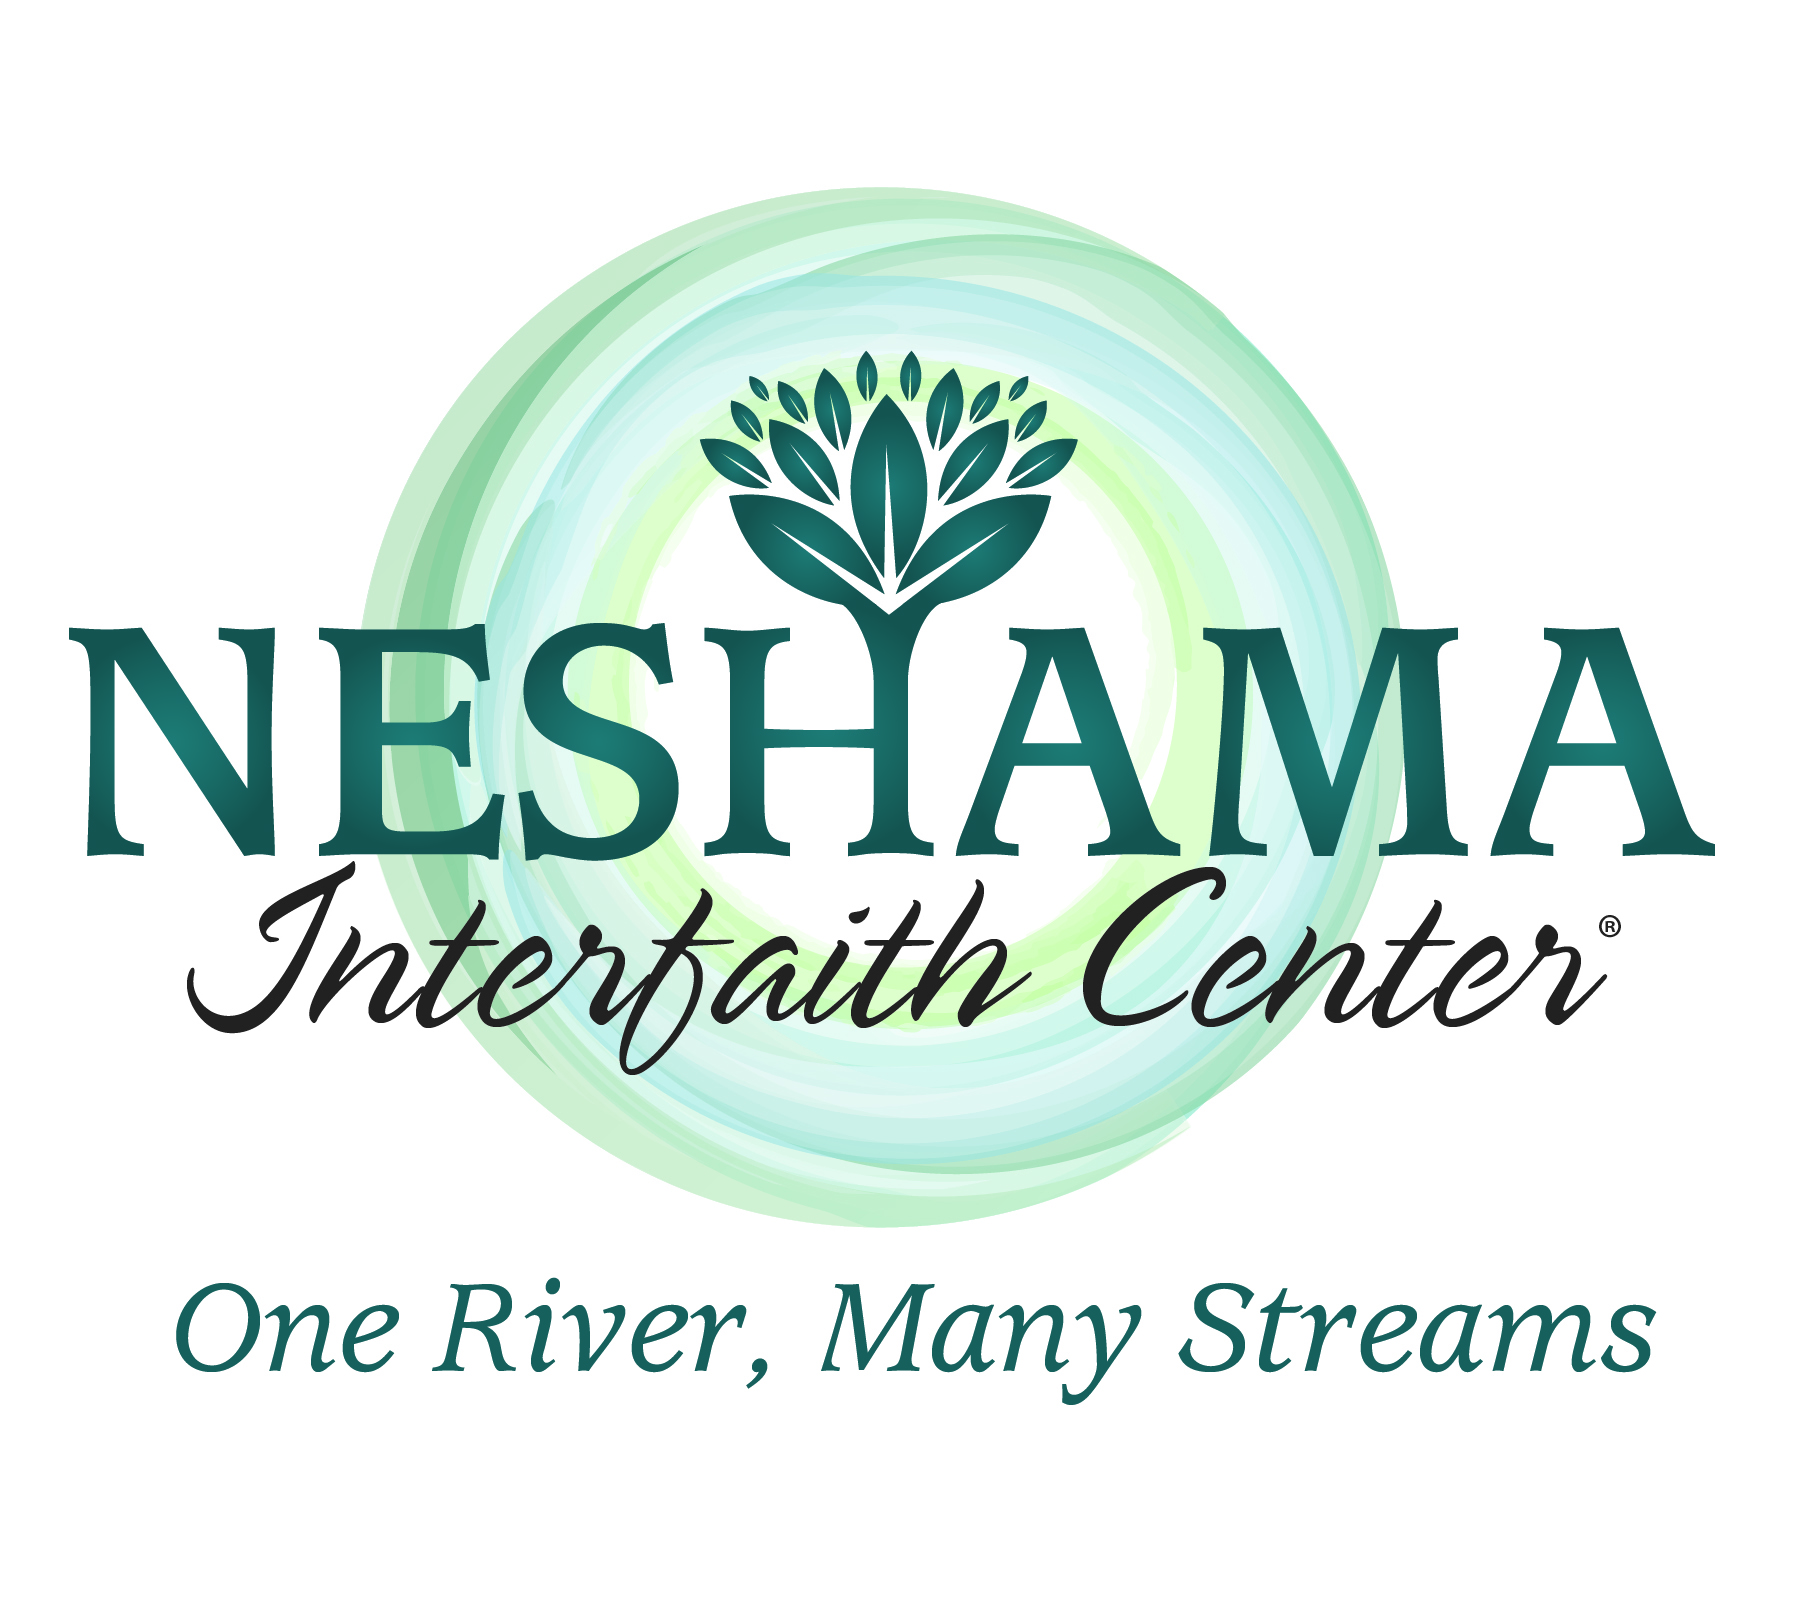 Neshama Interfaith Center